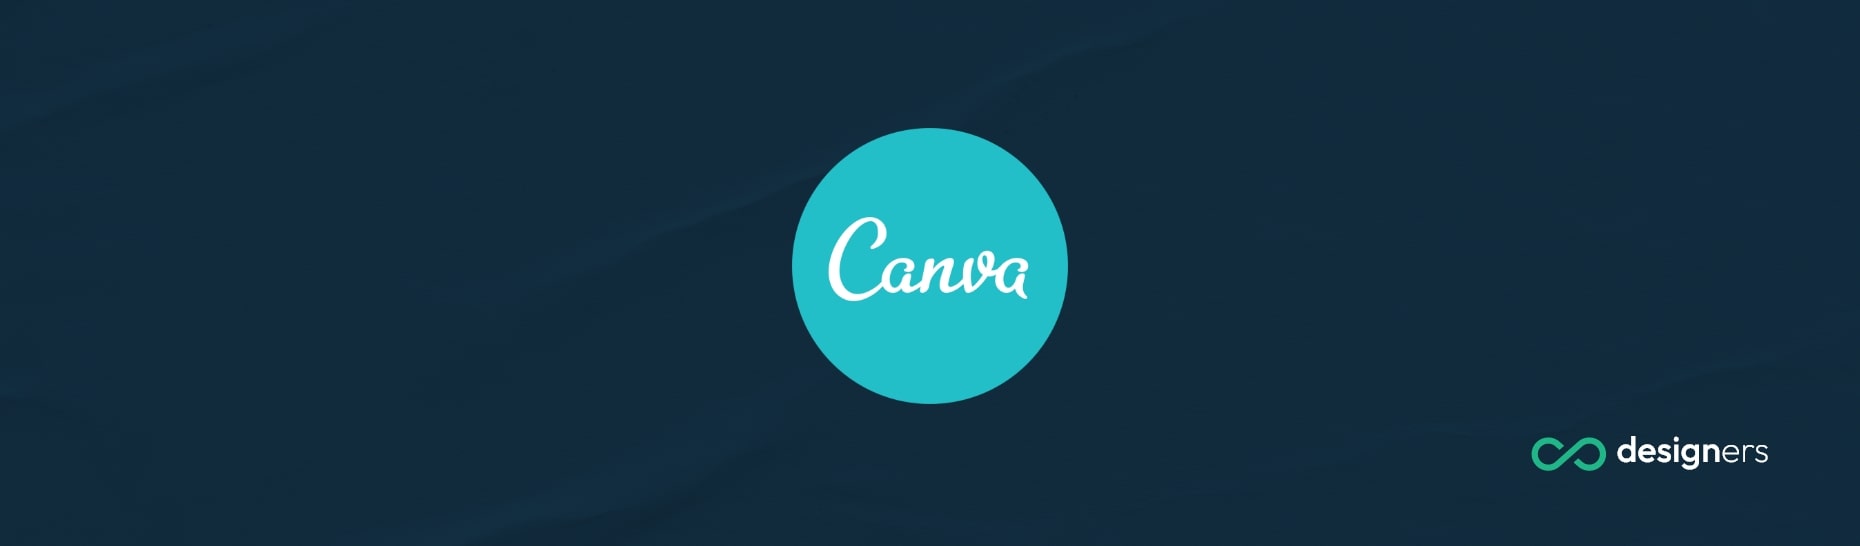 Is Canva a B2B?